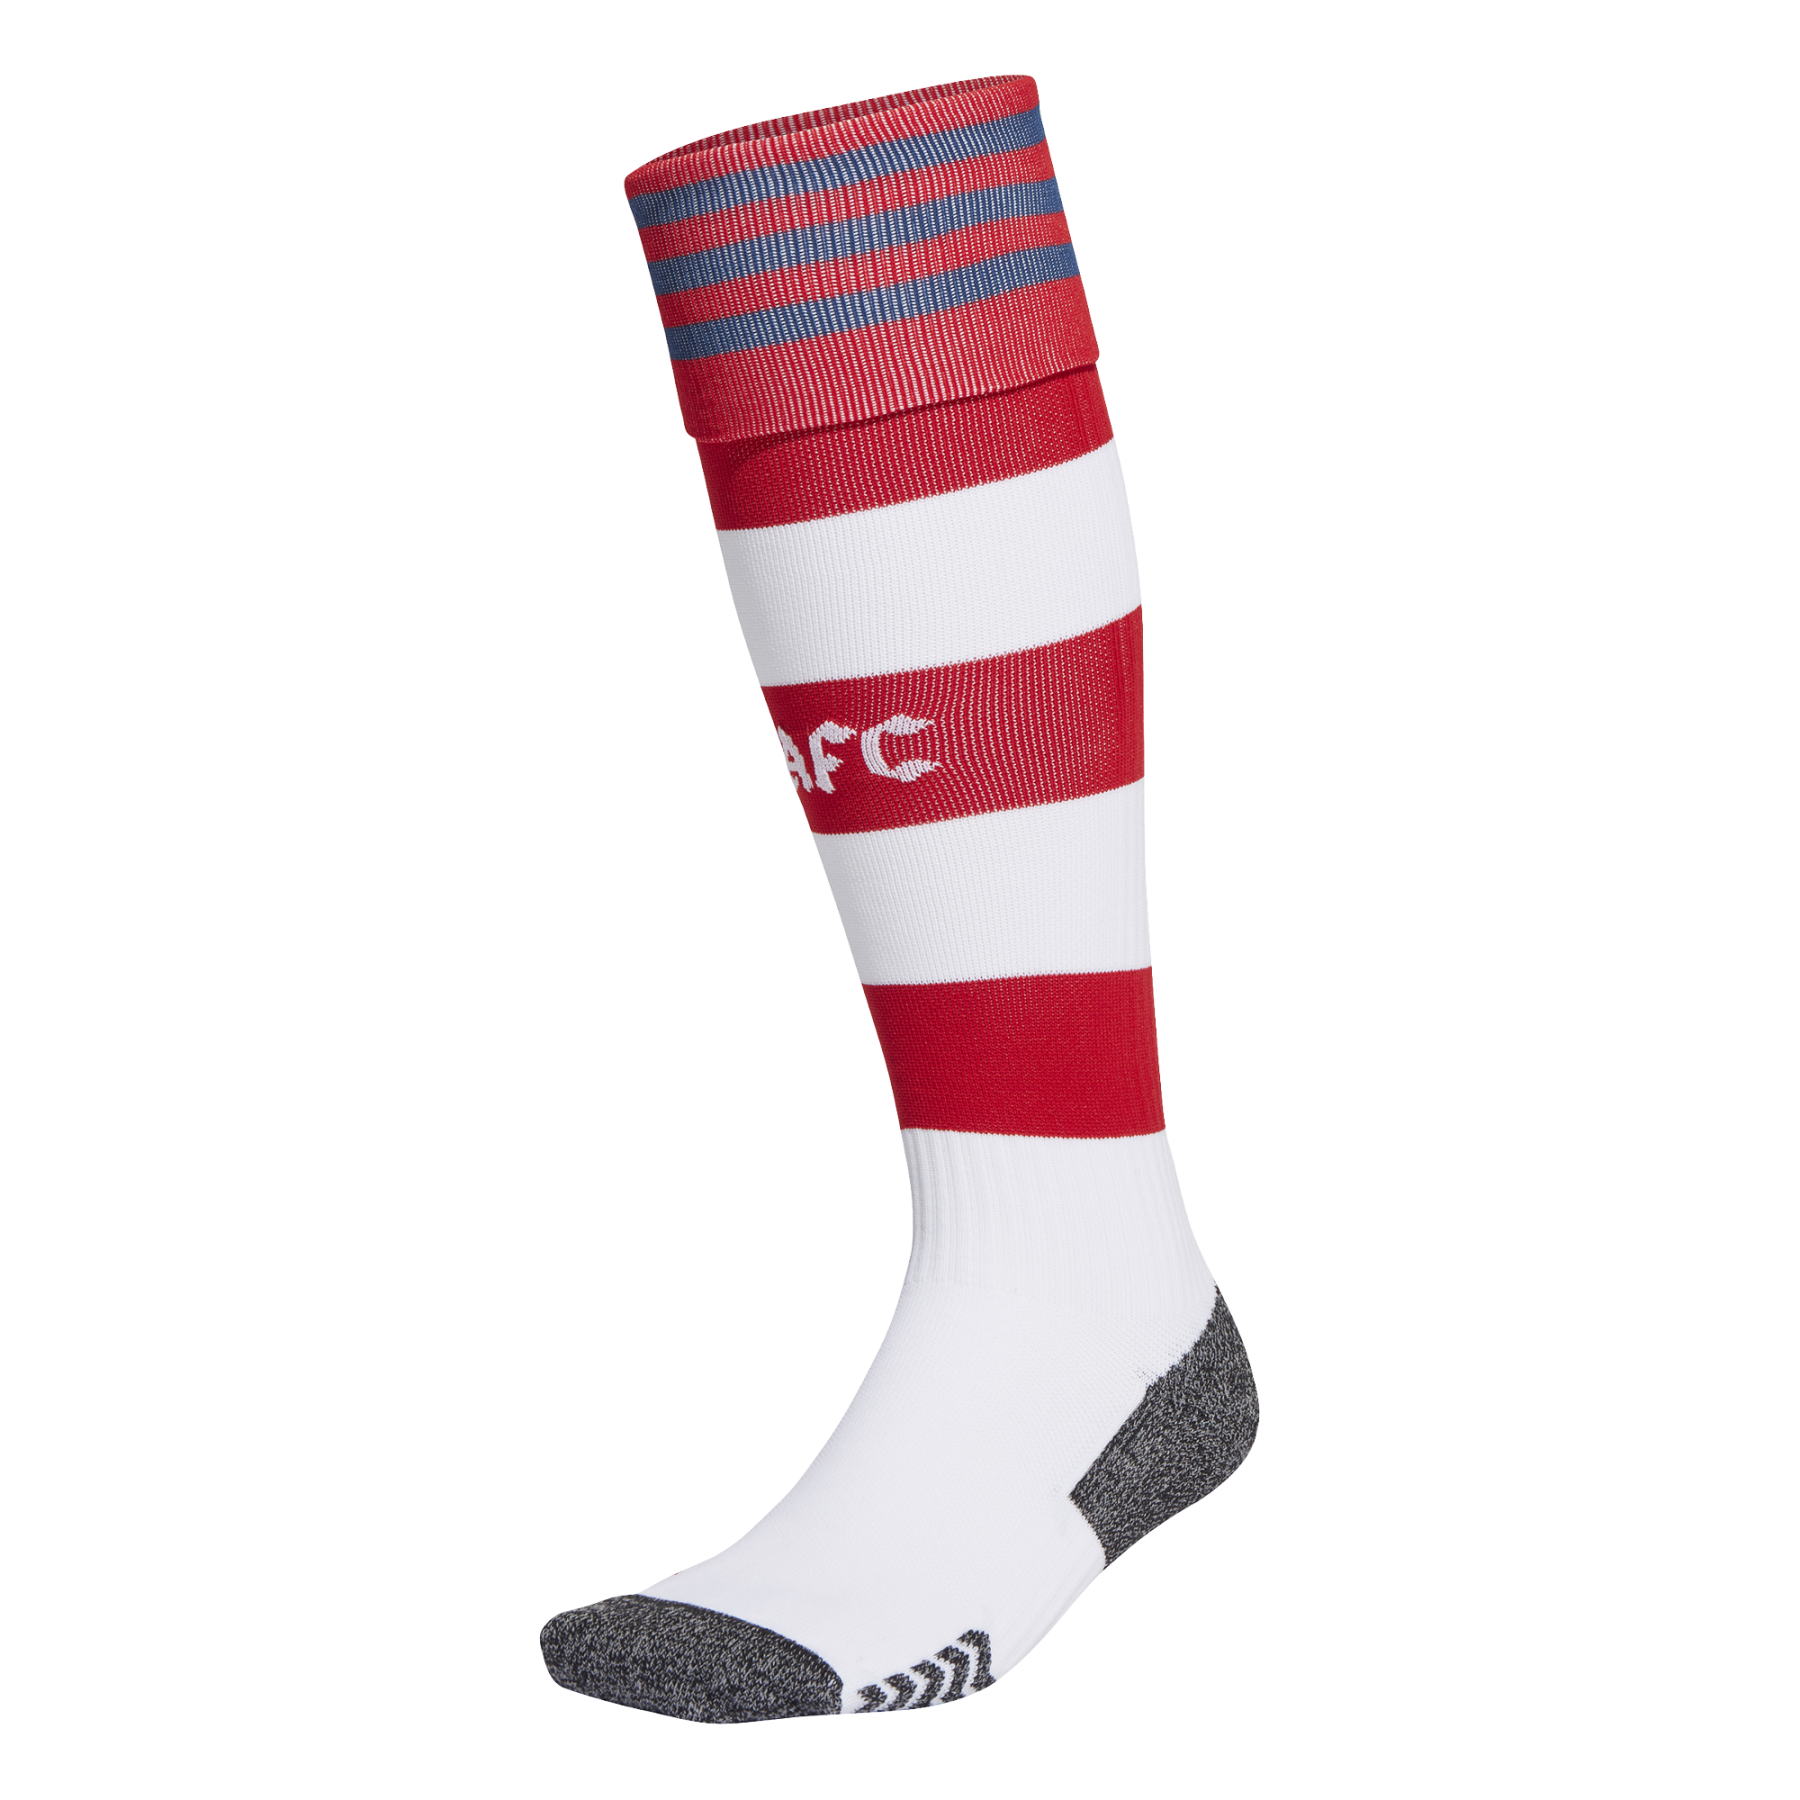 Home socks Arsenal 2021/22